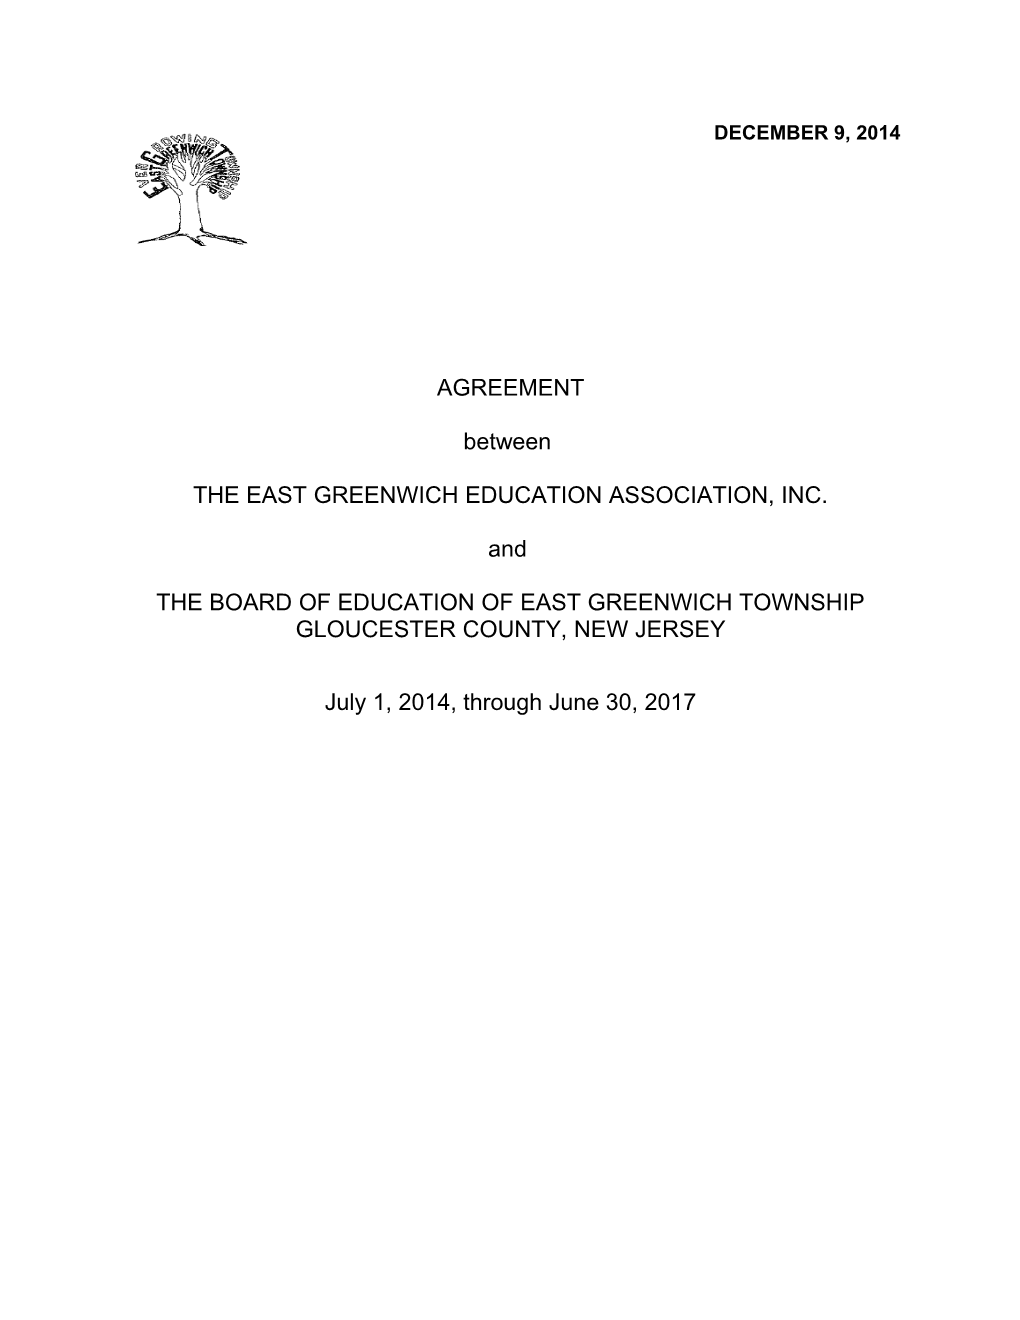 The East Greenwich Education Association, Inc